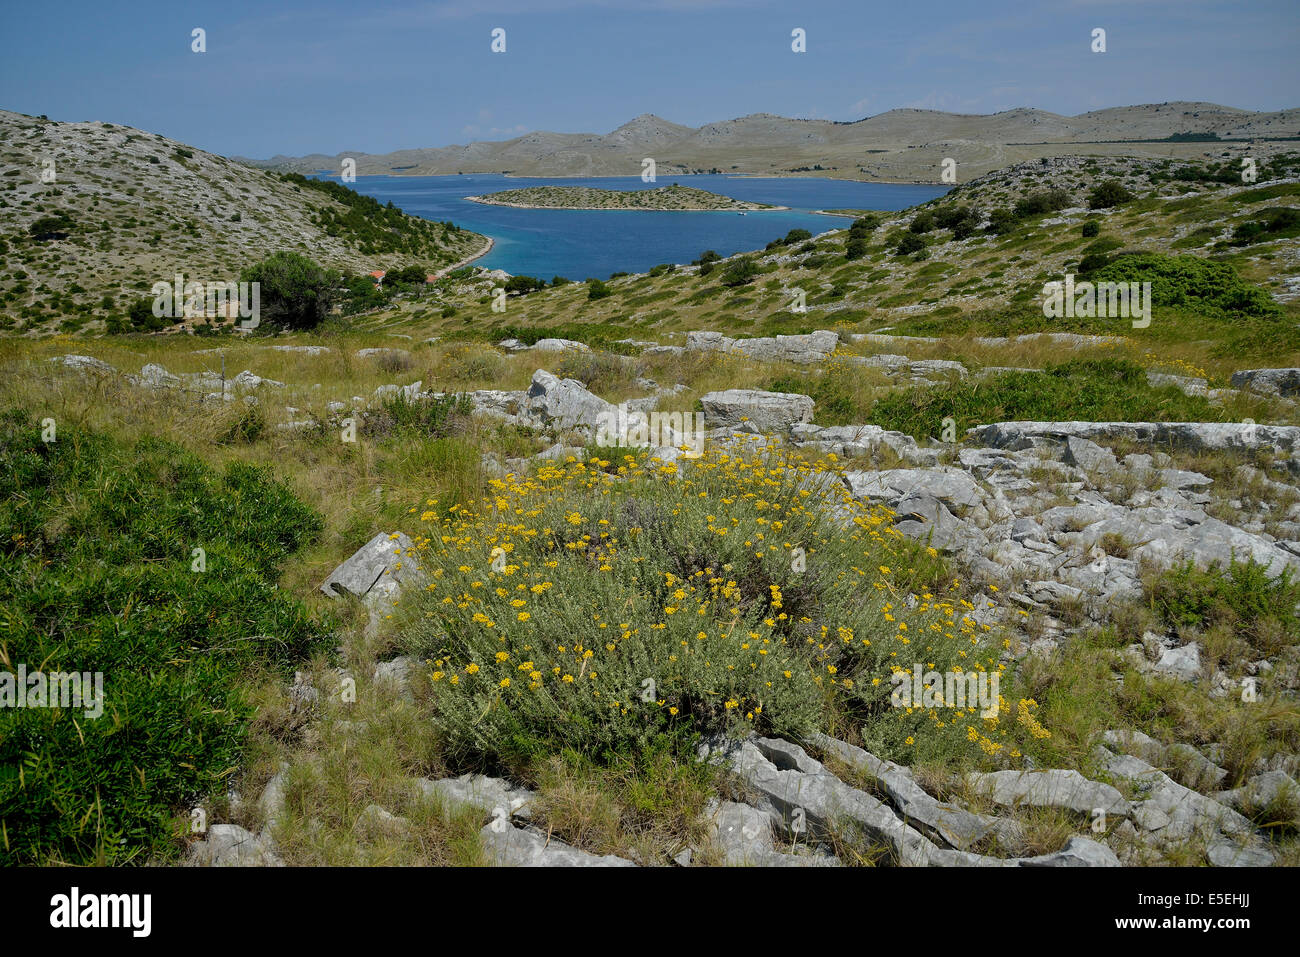 View from Levrnaka island over the Kornati Islands, Adriatic Sea, Kornati Islands National Park, Croatia Stock Photo